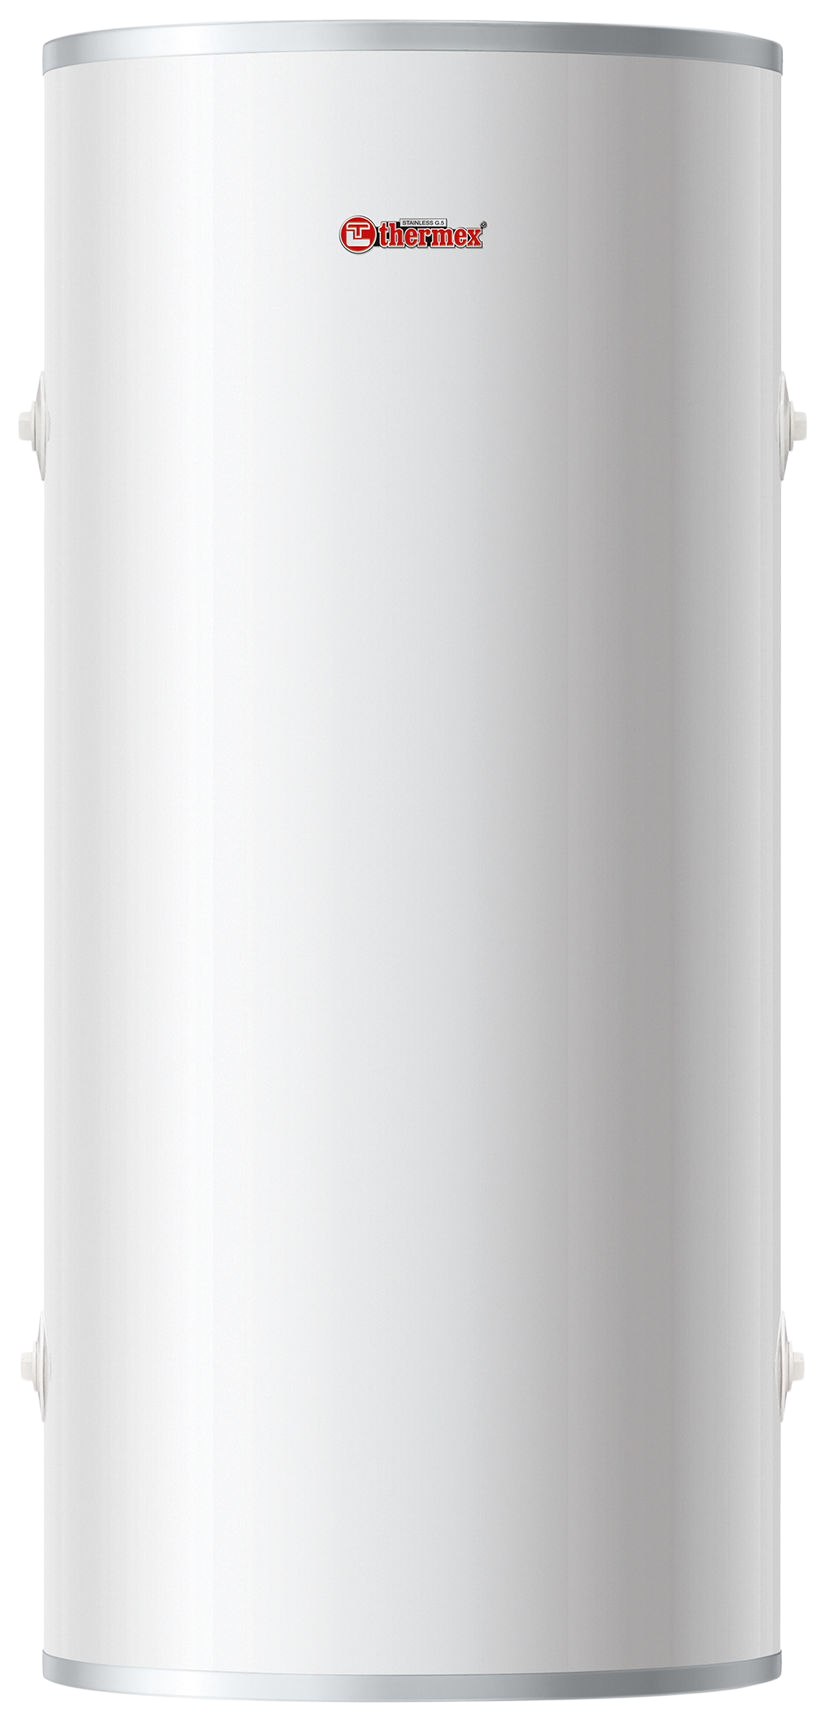 Водонагреватель накопительный THERMEX IR 200 V white водонагреватель накопительный eterna engineering fs 80 80 л white